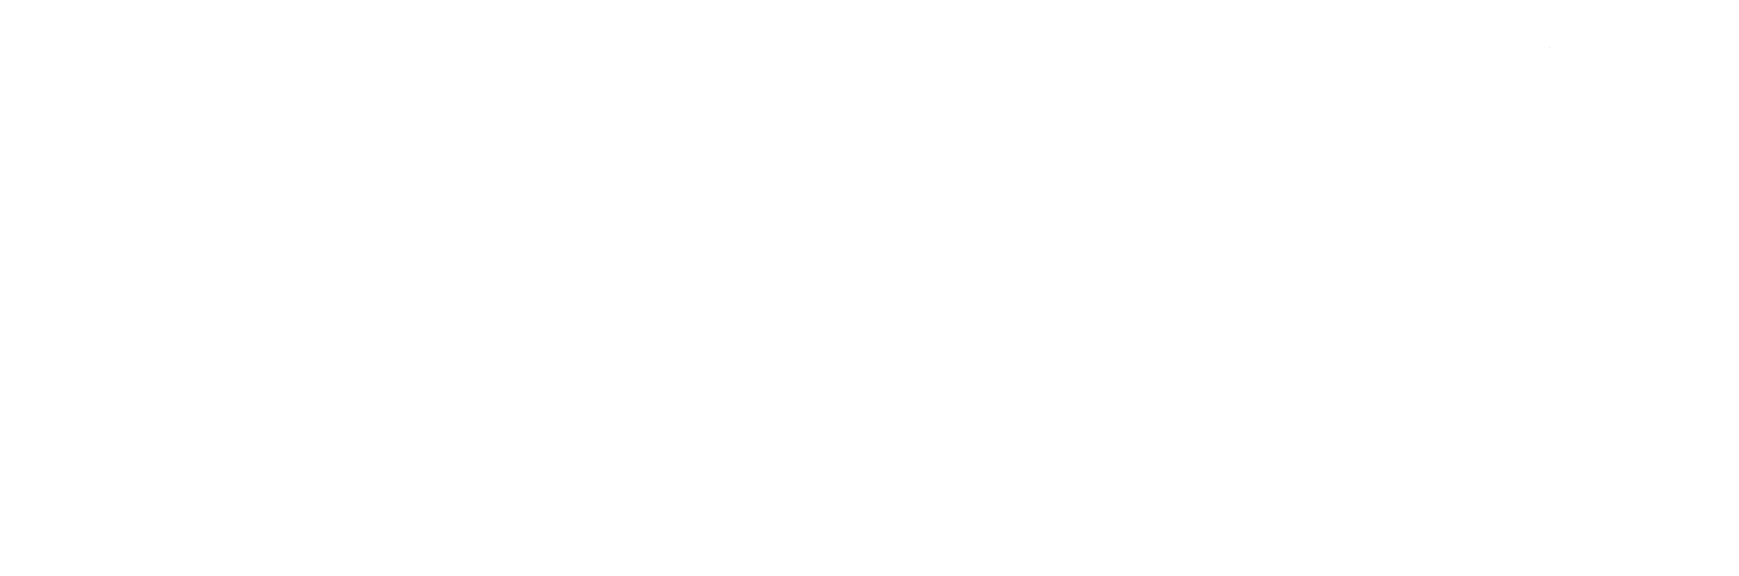 Mes oraux – ESDES Business School